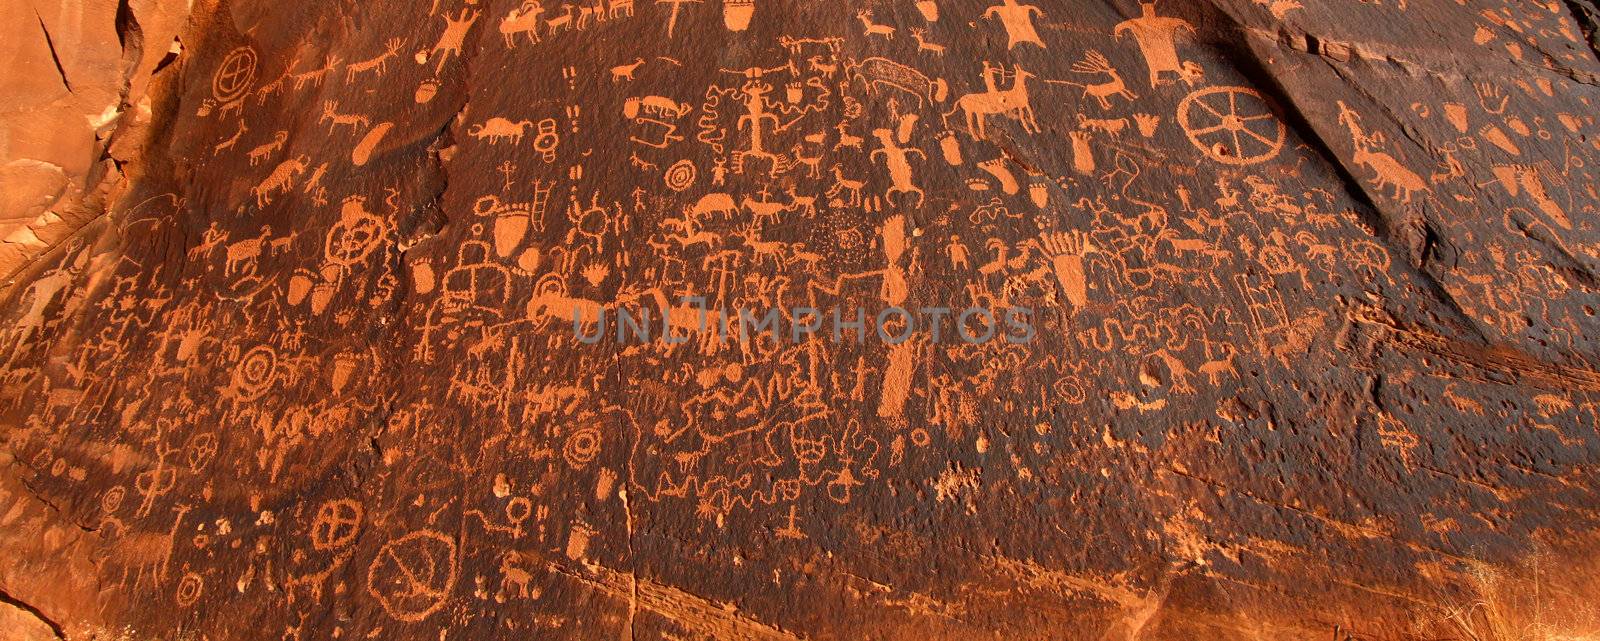 Panoramic view of the petroglyphs on Newspaper Rock in Utah - USA.